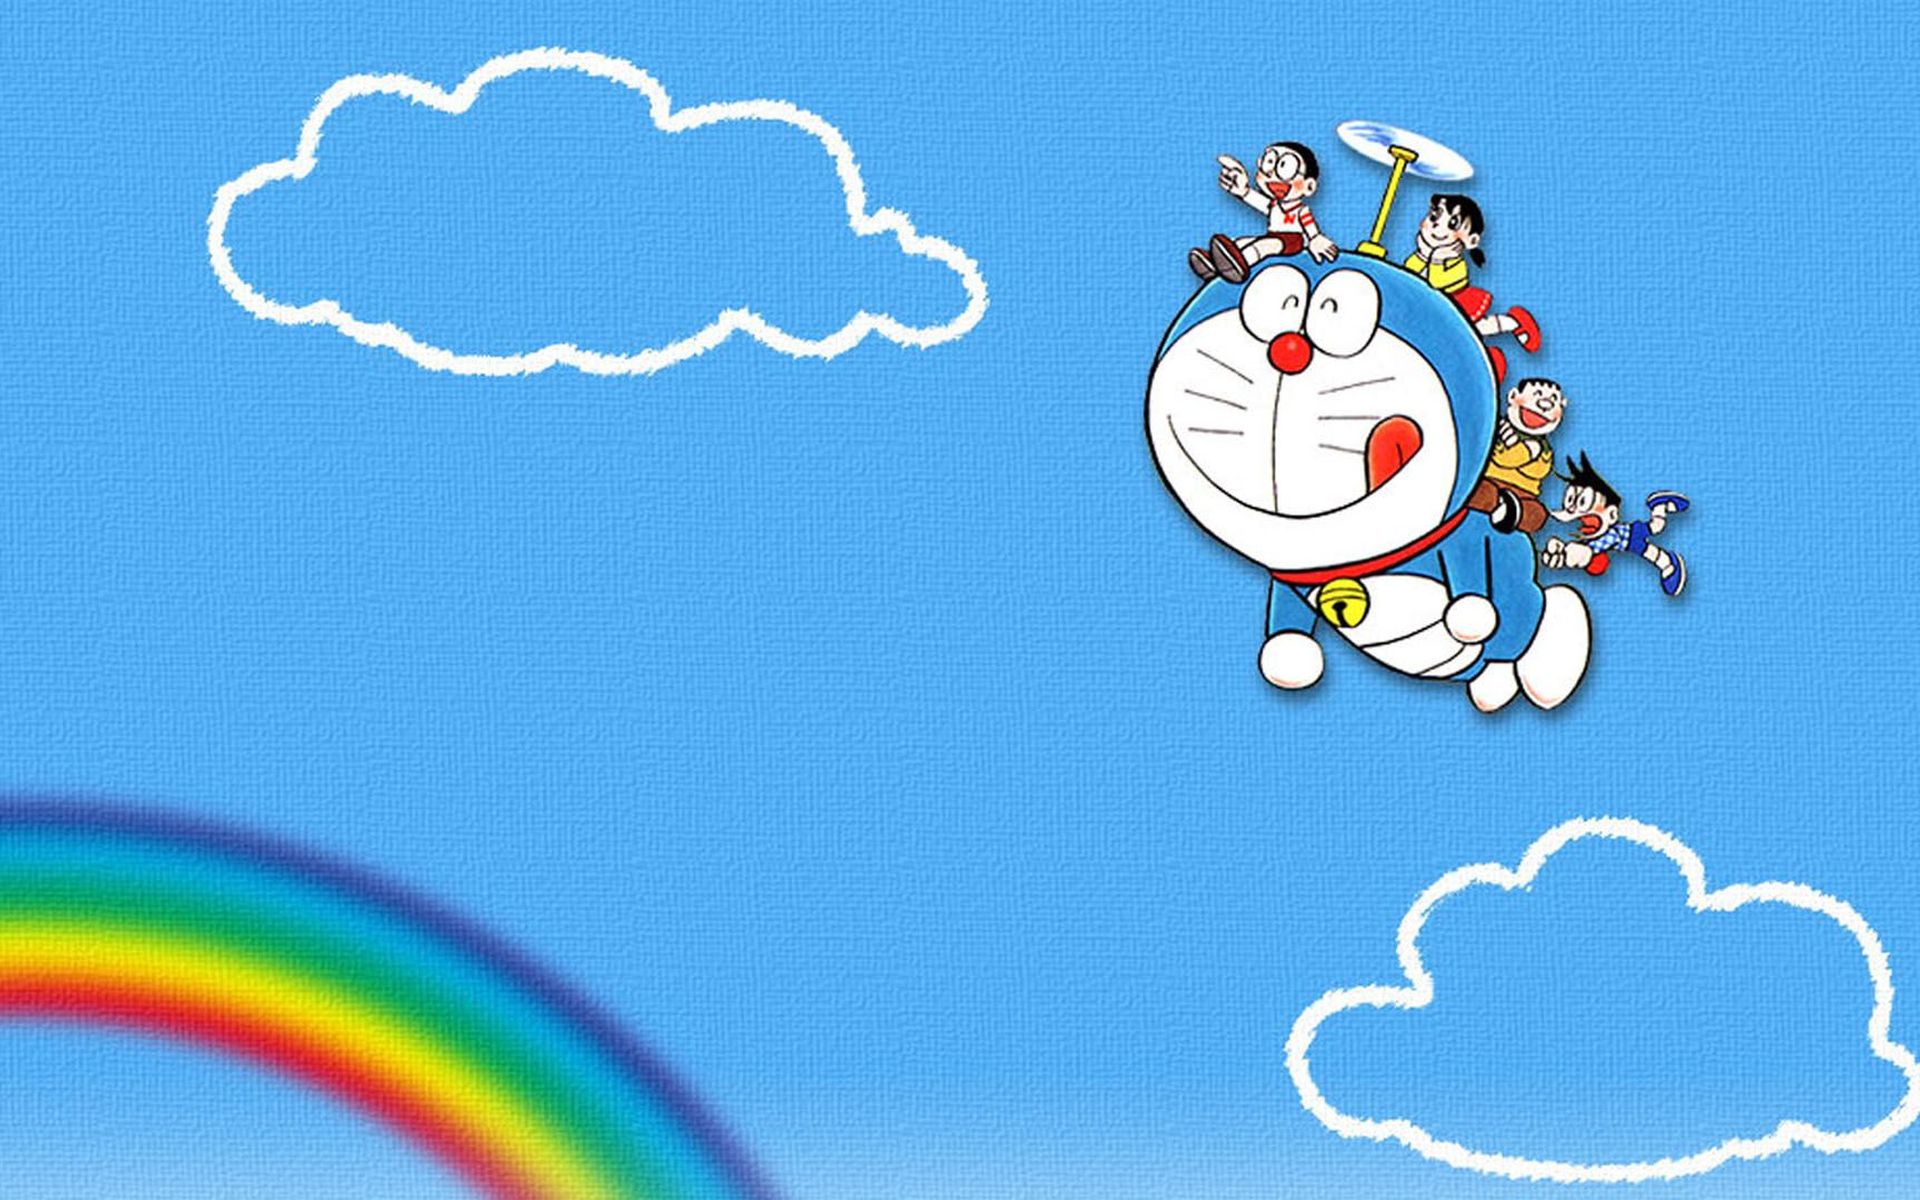 Doraemon Full HD Background Picture Image